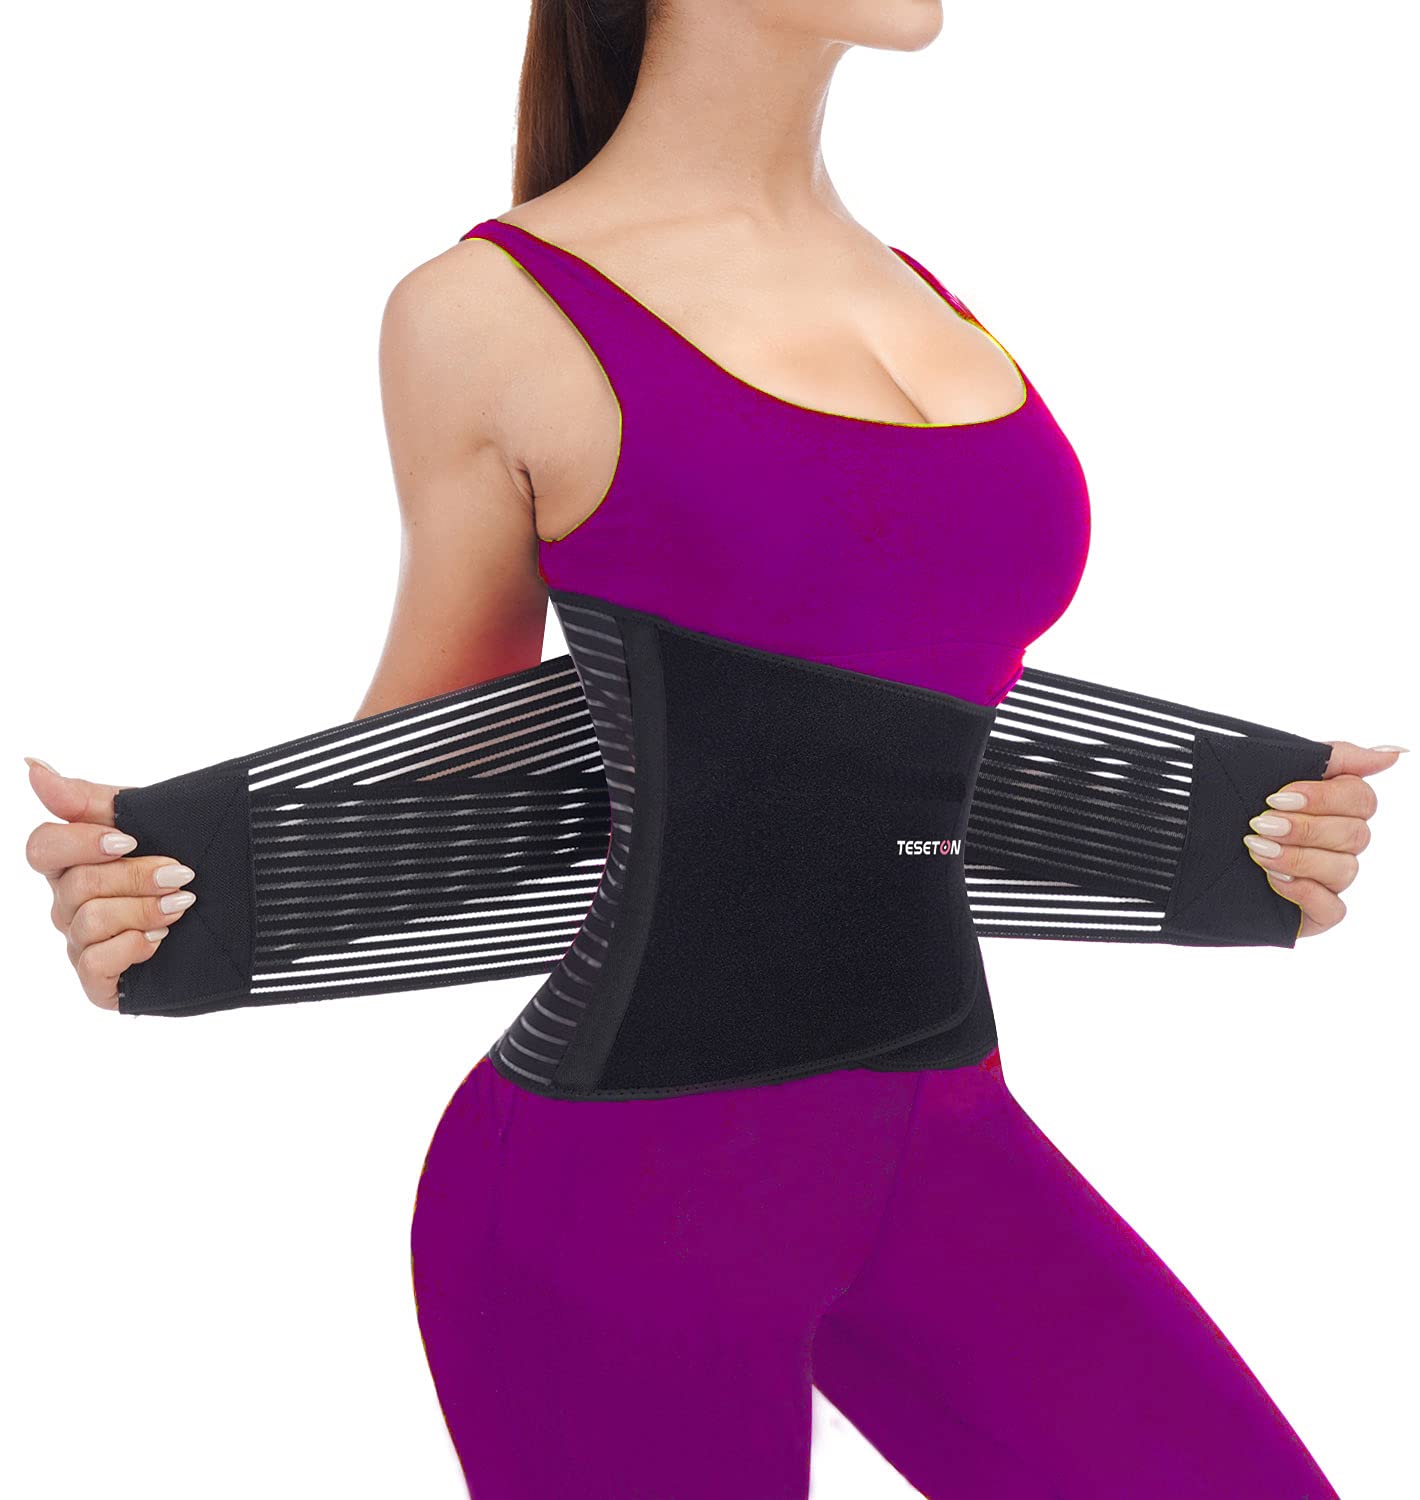 Back Support Brace Belt for Men & Women - Breathable Lumbar Support Belt,  scoliosis back brace, Waist